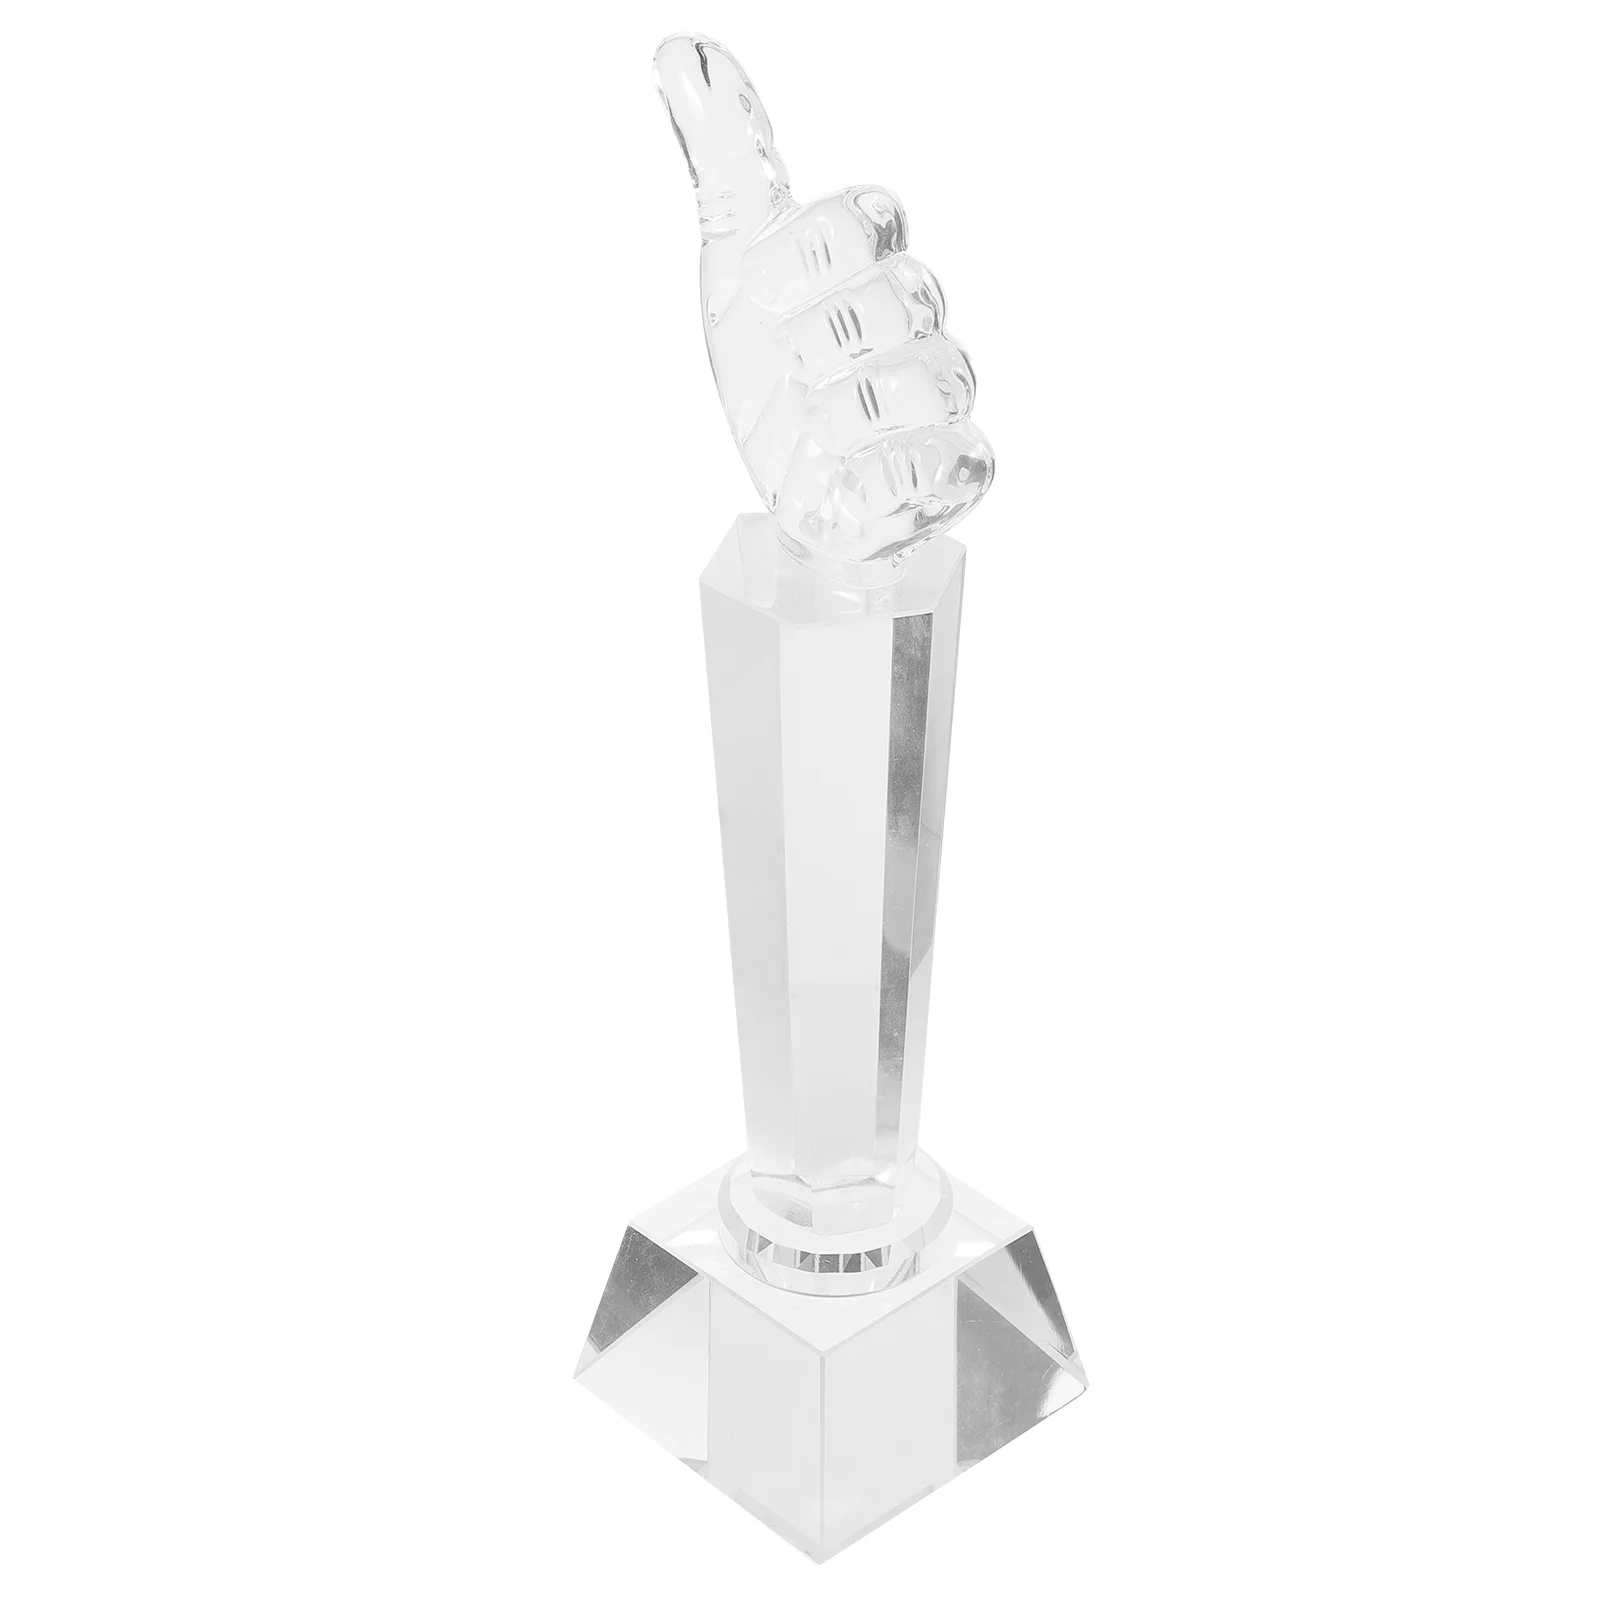 Transparent Trophy Crystal Trophy Crystal Trophy Decor Clear Trophy Ornament Trophy Cup